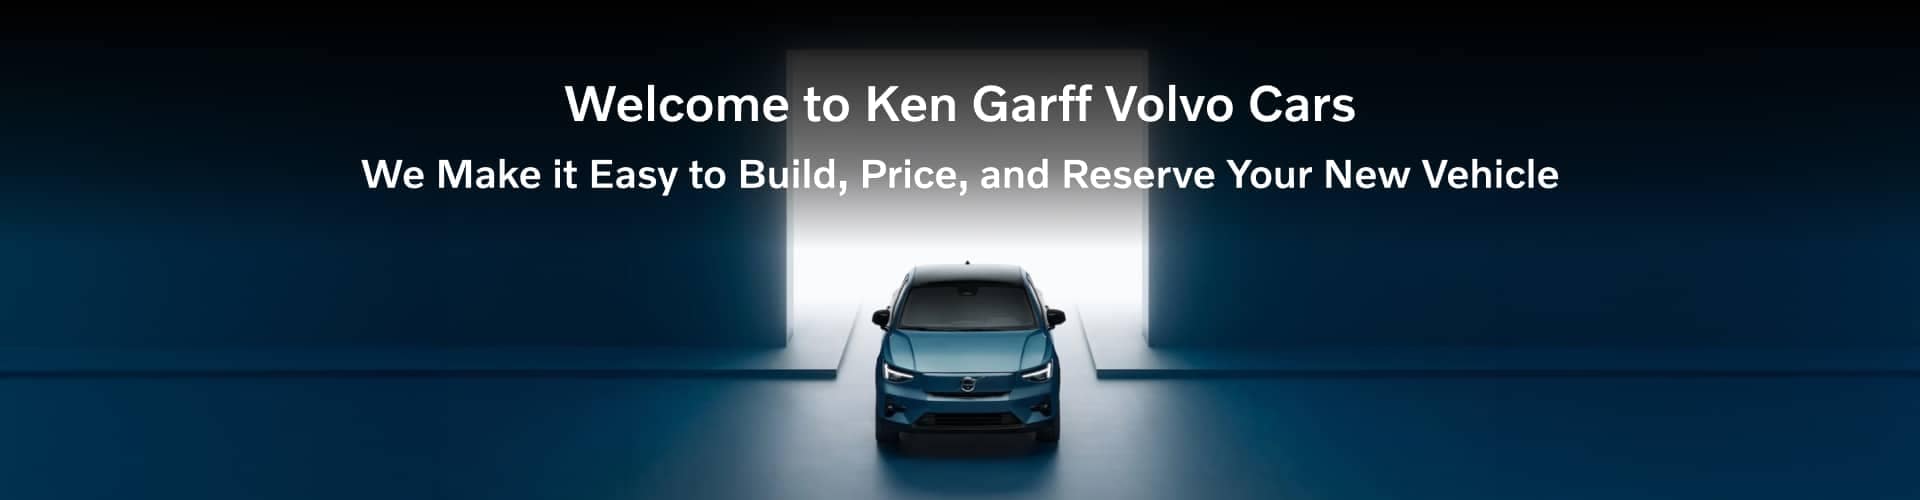 Welcome to Ken Garff Volvo Cars